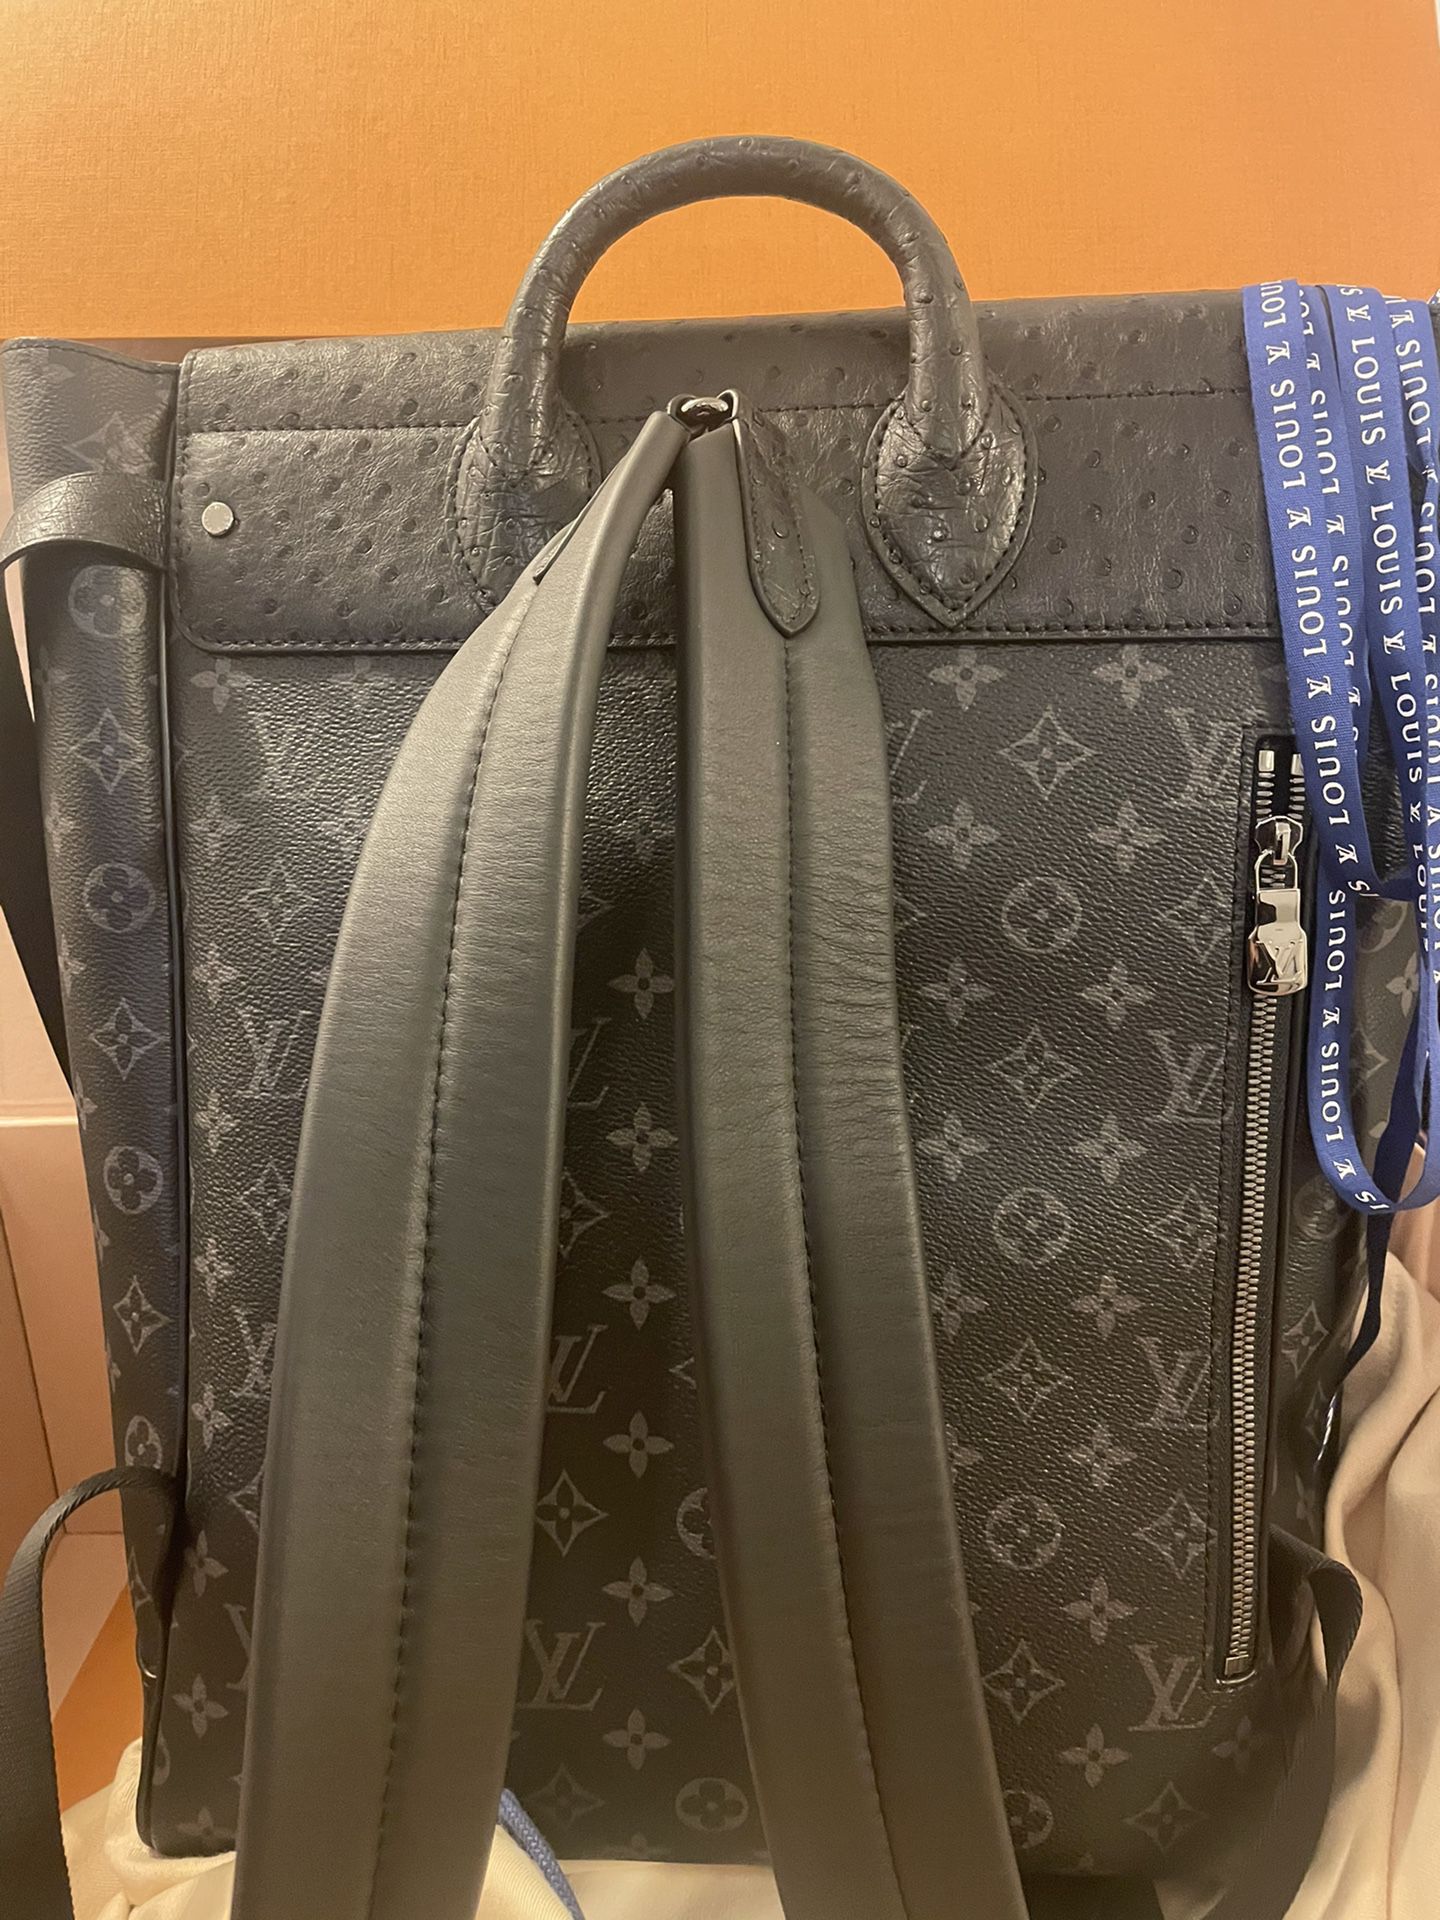 Louis Vuitton LV Men's backpack - $200 OBO - clothing